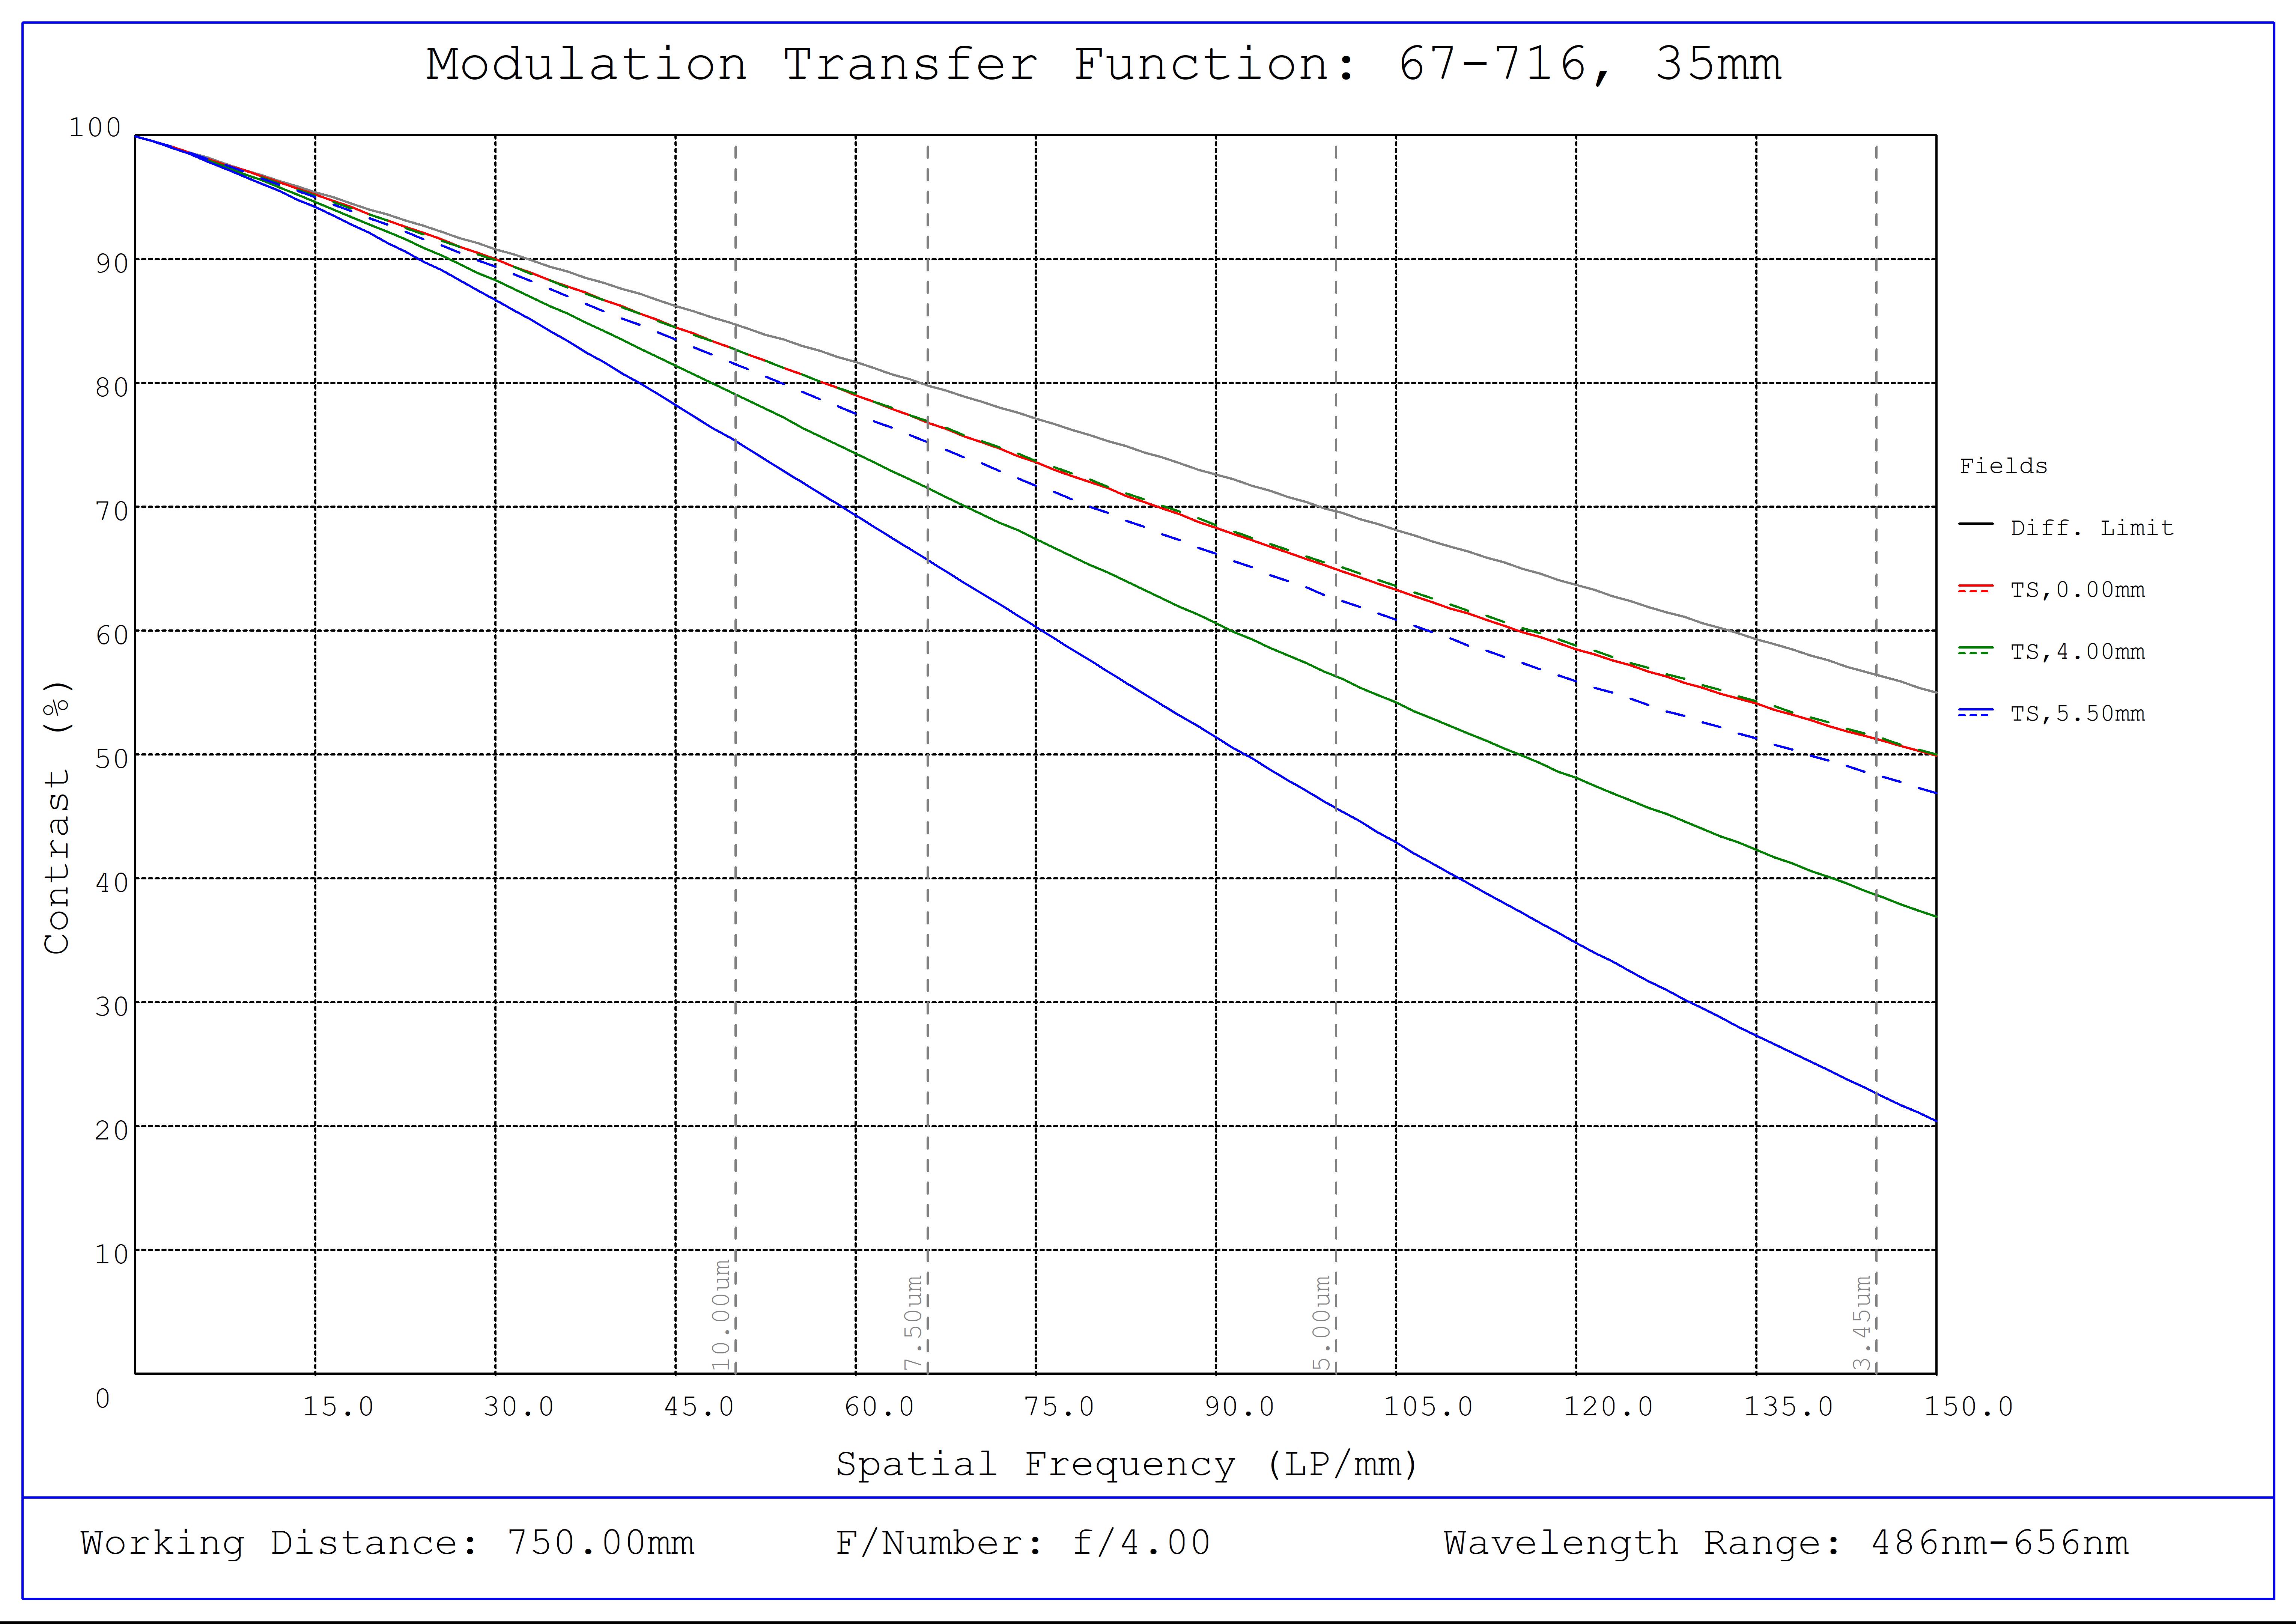 #67-716, 35mm C VIS-NIR Series Fixed Focal Length Lens, Modulated Transfer Function (MTF) Plot, 750mm Working Distance, f4